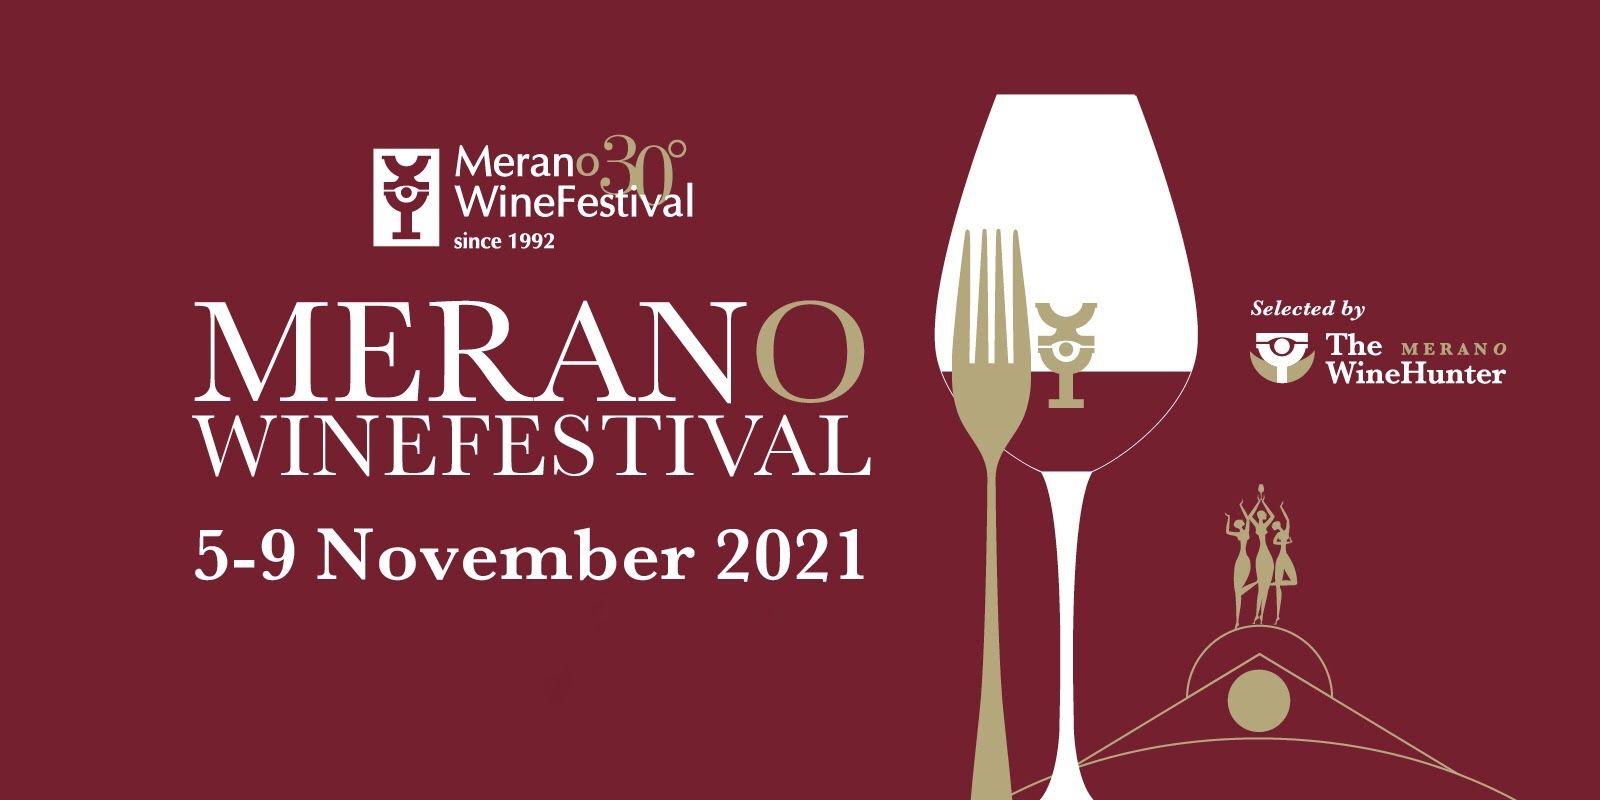 Merano WineFestival 2021